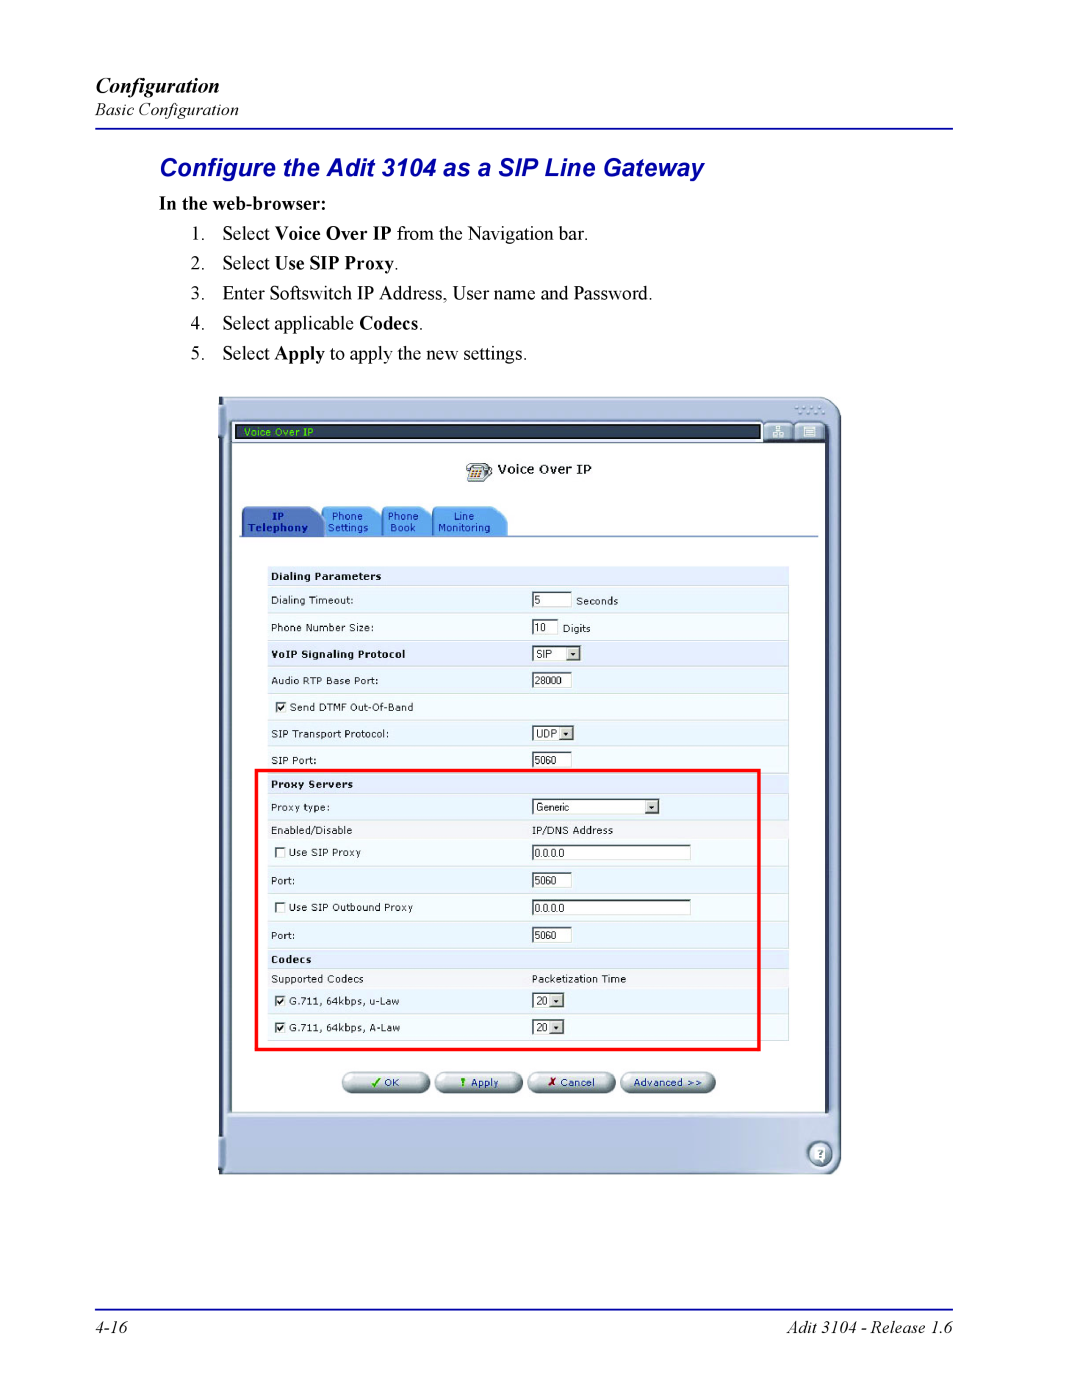 Carrier Access user manual Configure the Adit 3104 as a SIP Line Gateway, Configuration 